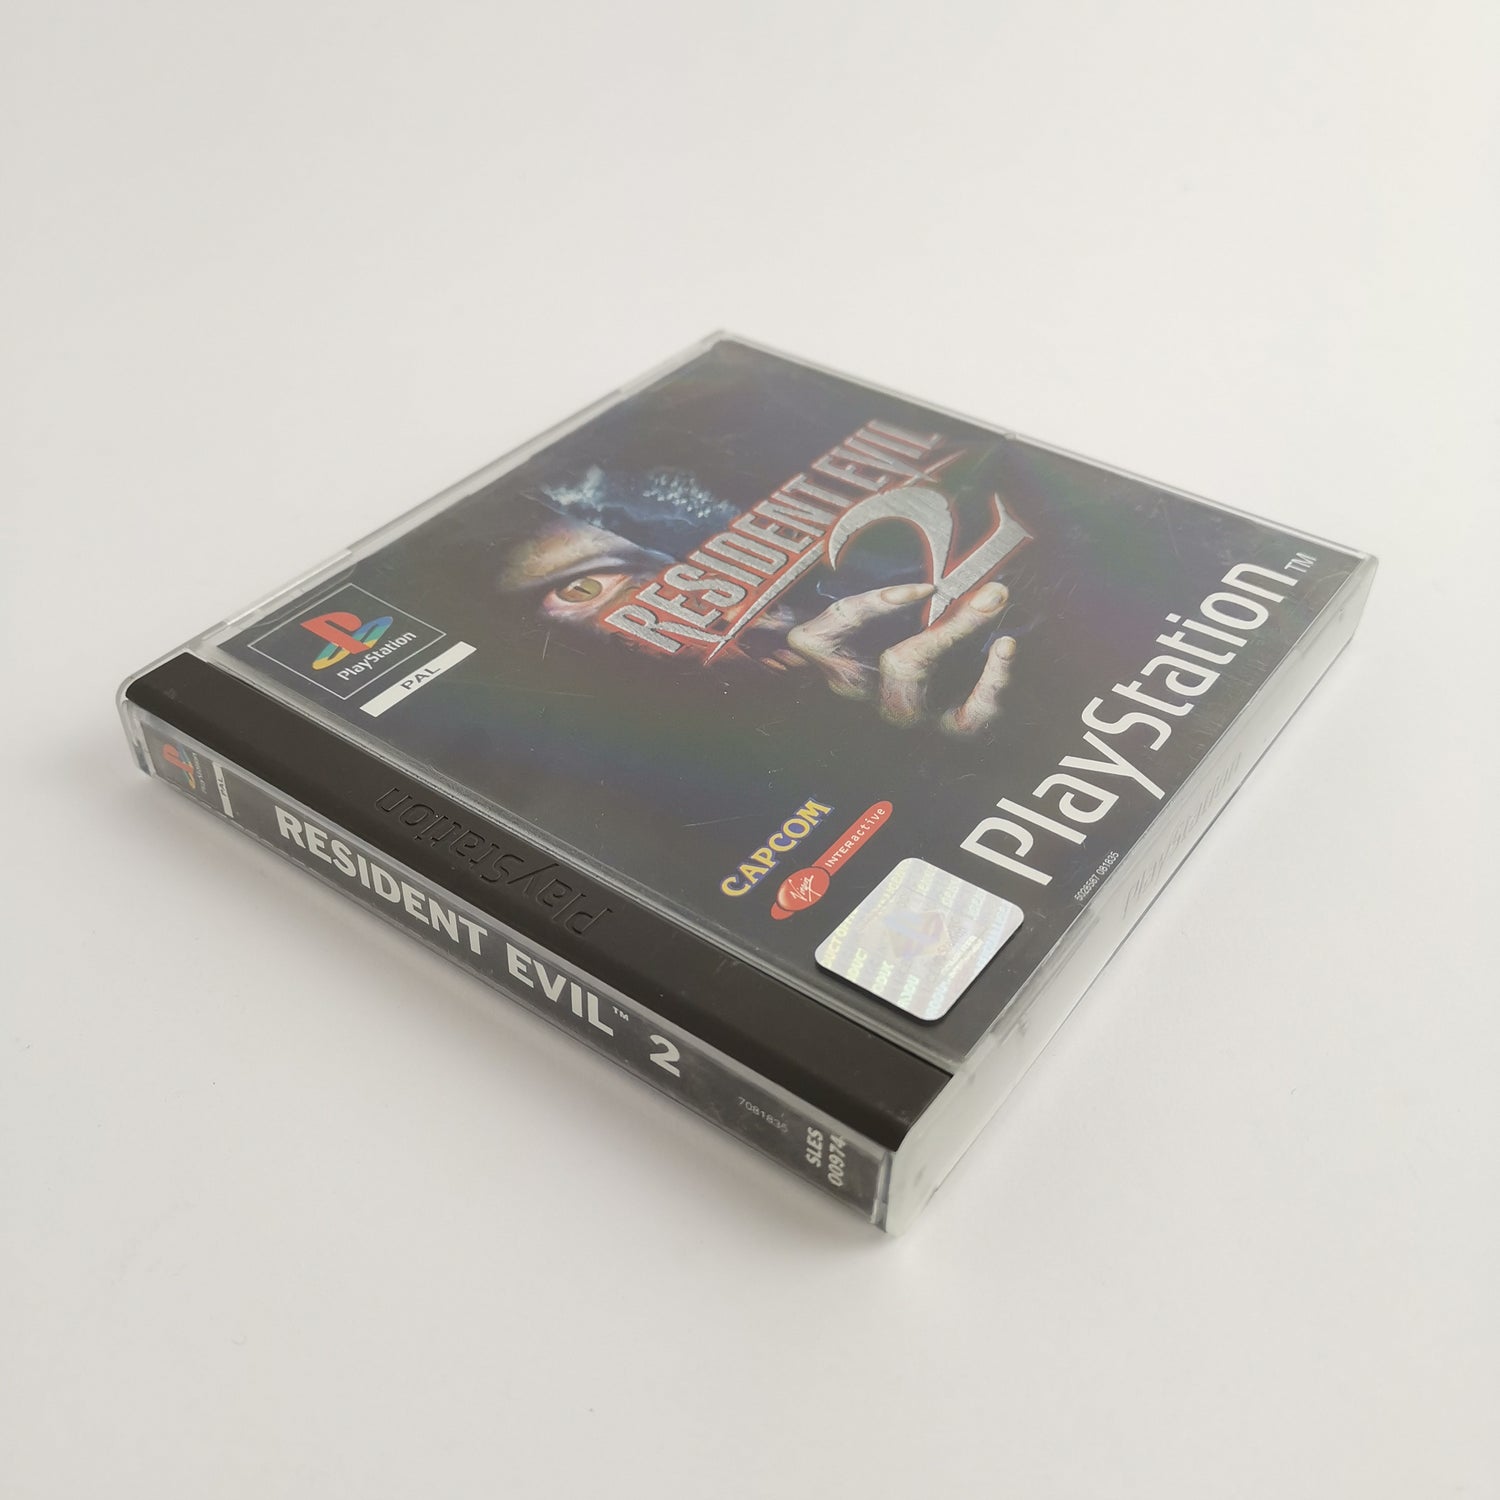 Sony Playstation 1 Game: Resident Evil 2 | PS1 PSX - OVP PAL USK18